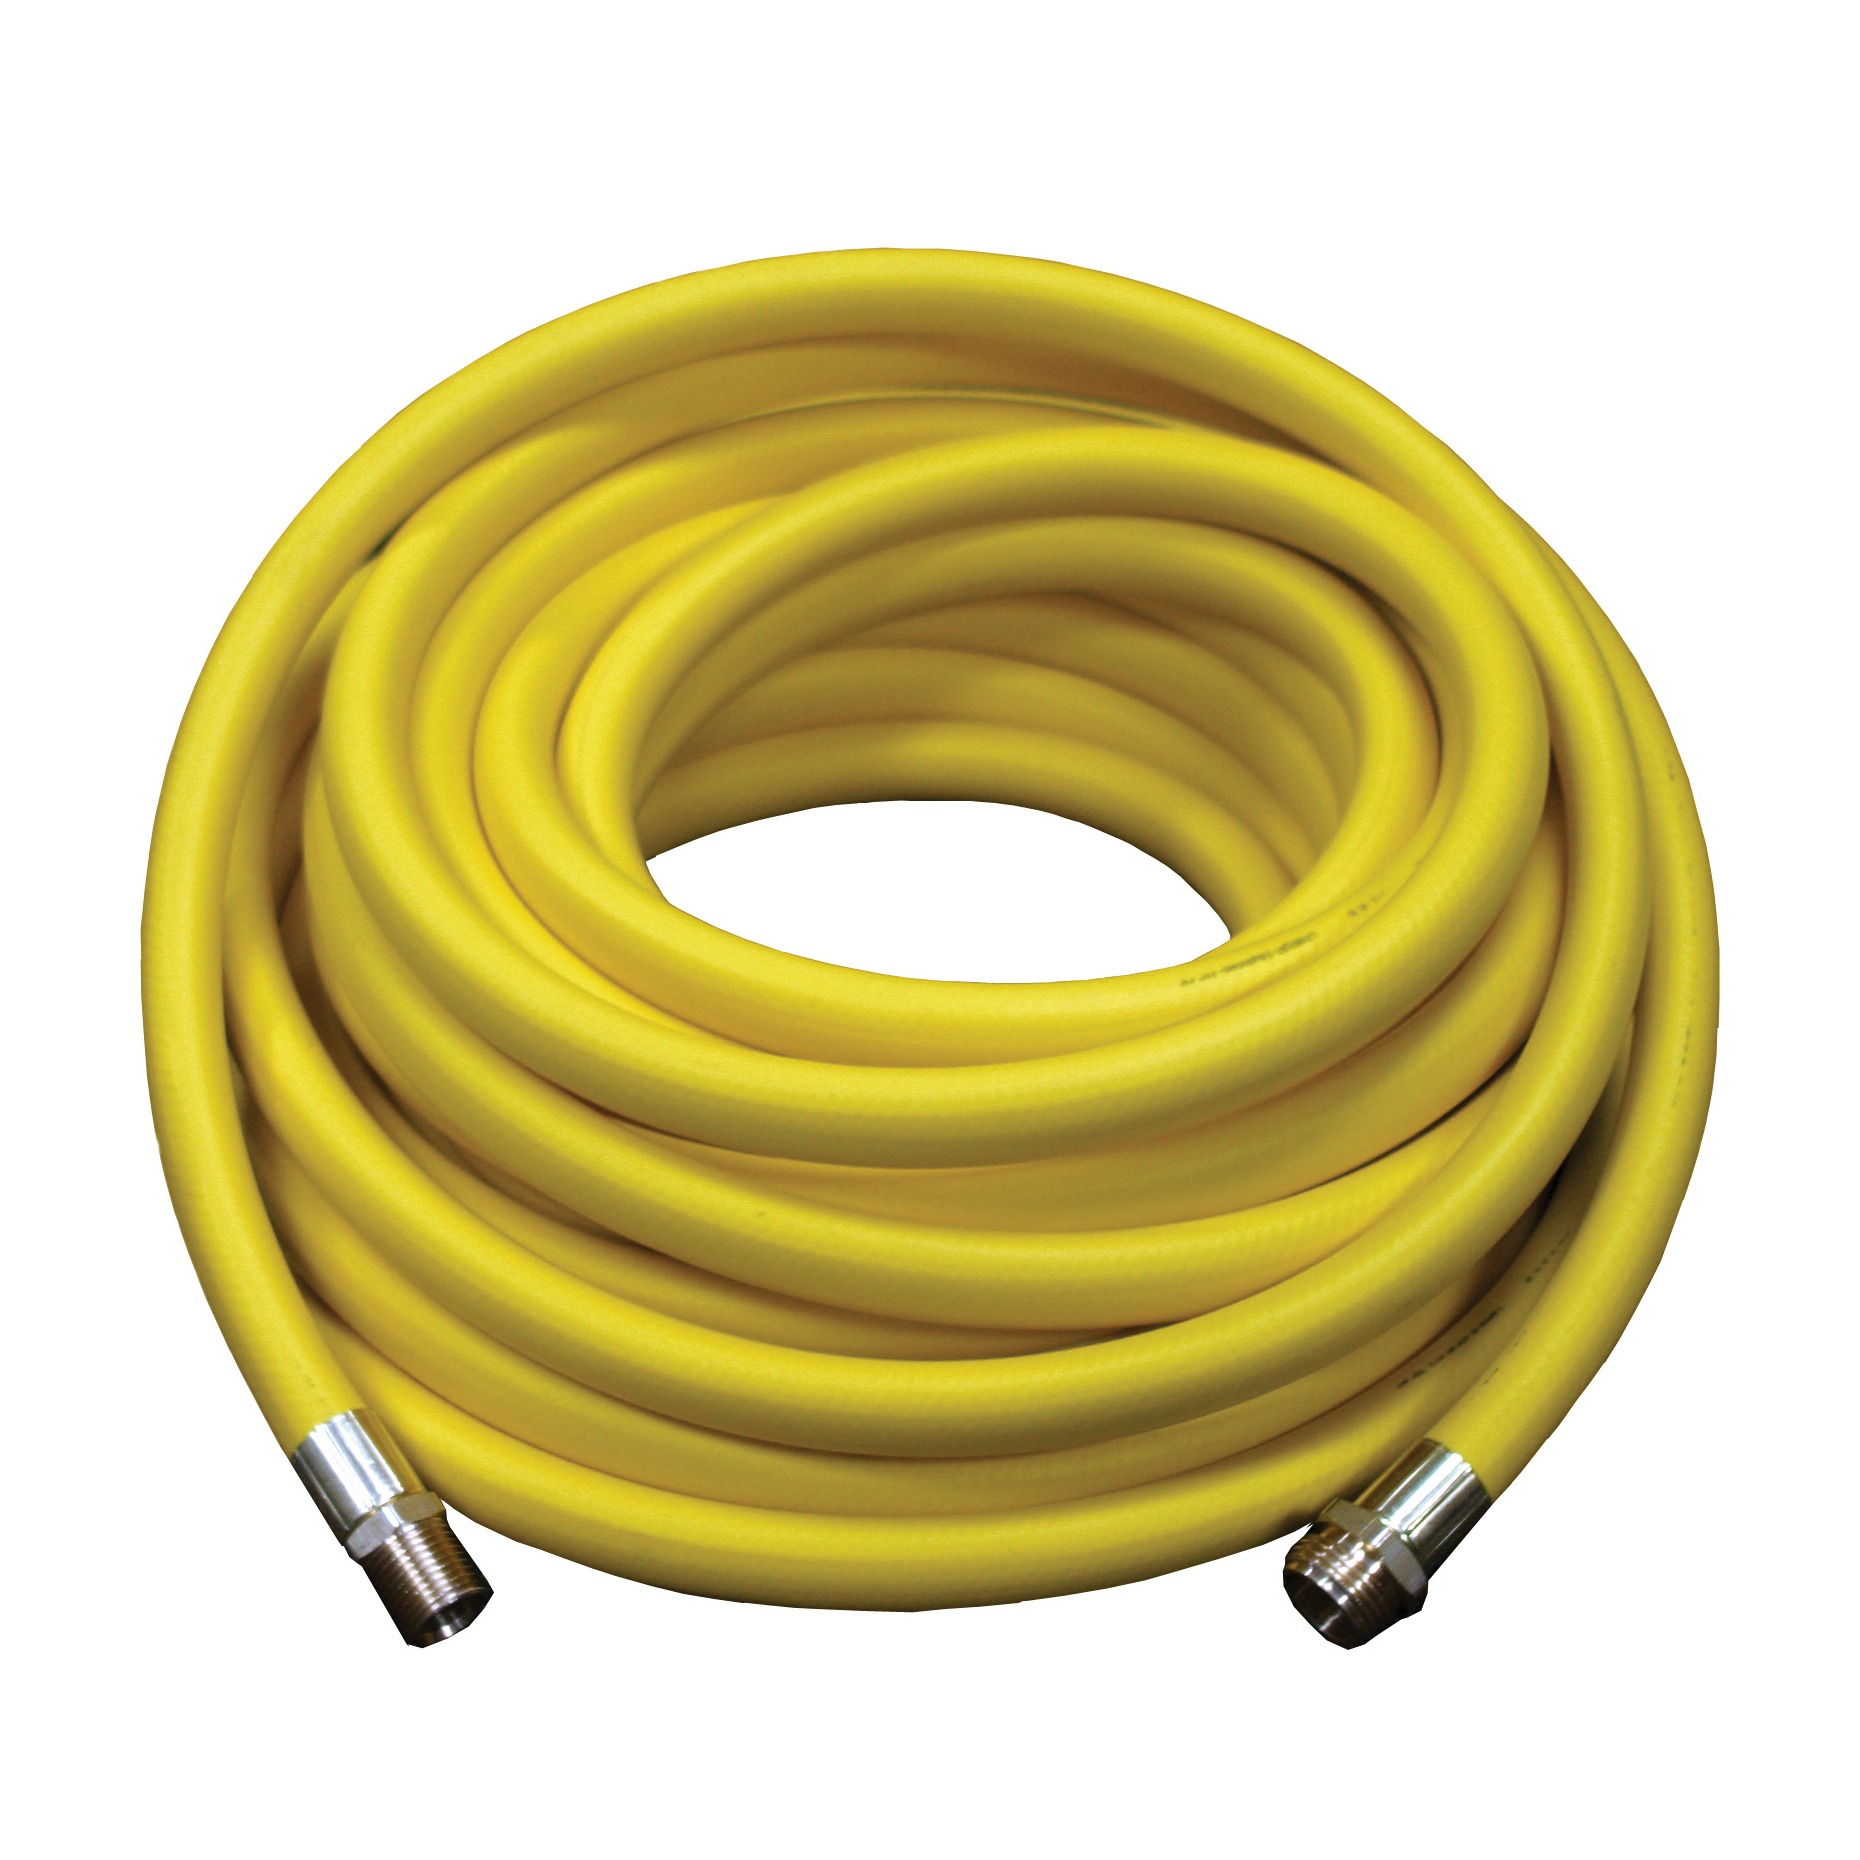 JBM 53882 PVC air hose reel 11 meters green inner diameter 8mm